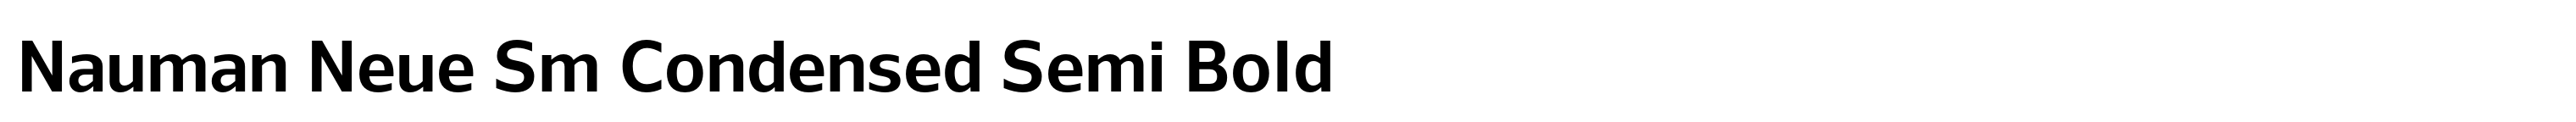 Nauman Neue Sm Condensed Semi Bold